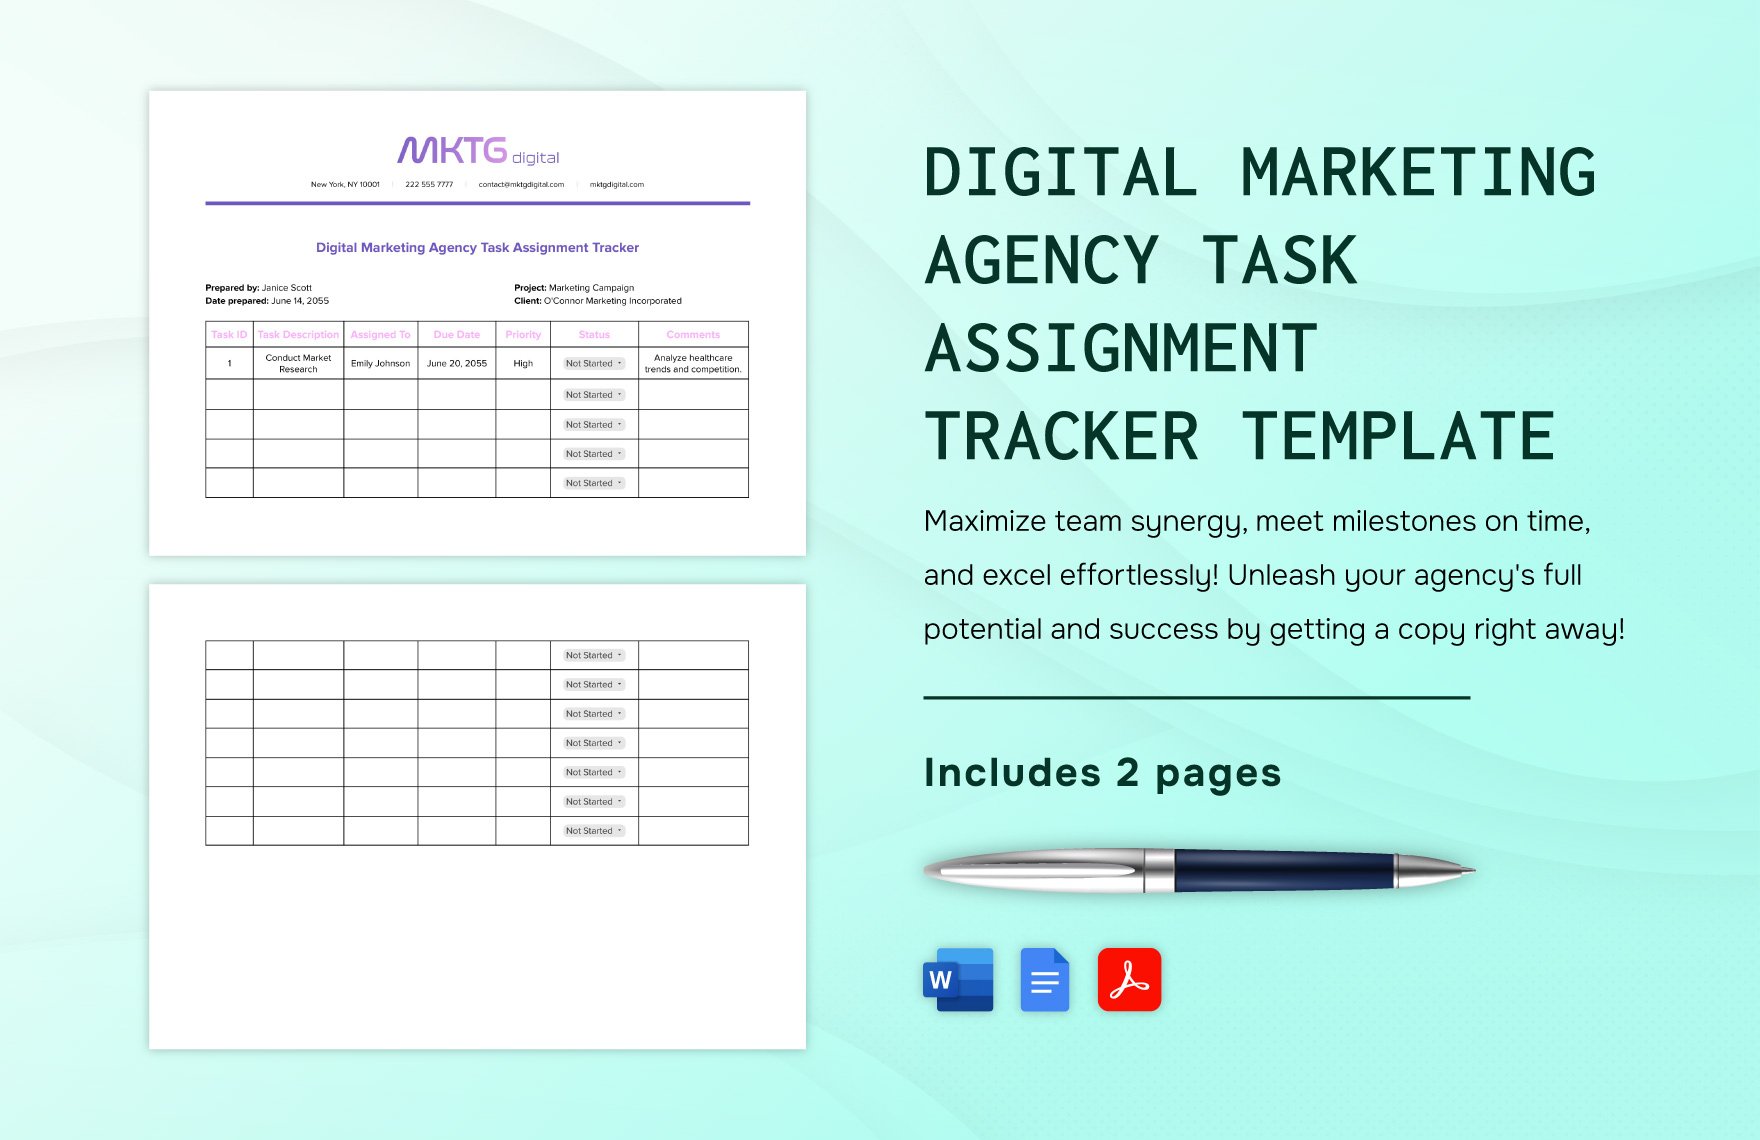 Digital Marketing Agency Task Assignment Tracker Template in Word, Google Docs, PDF